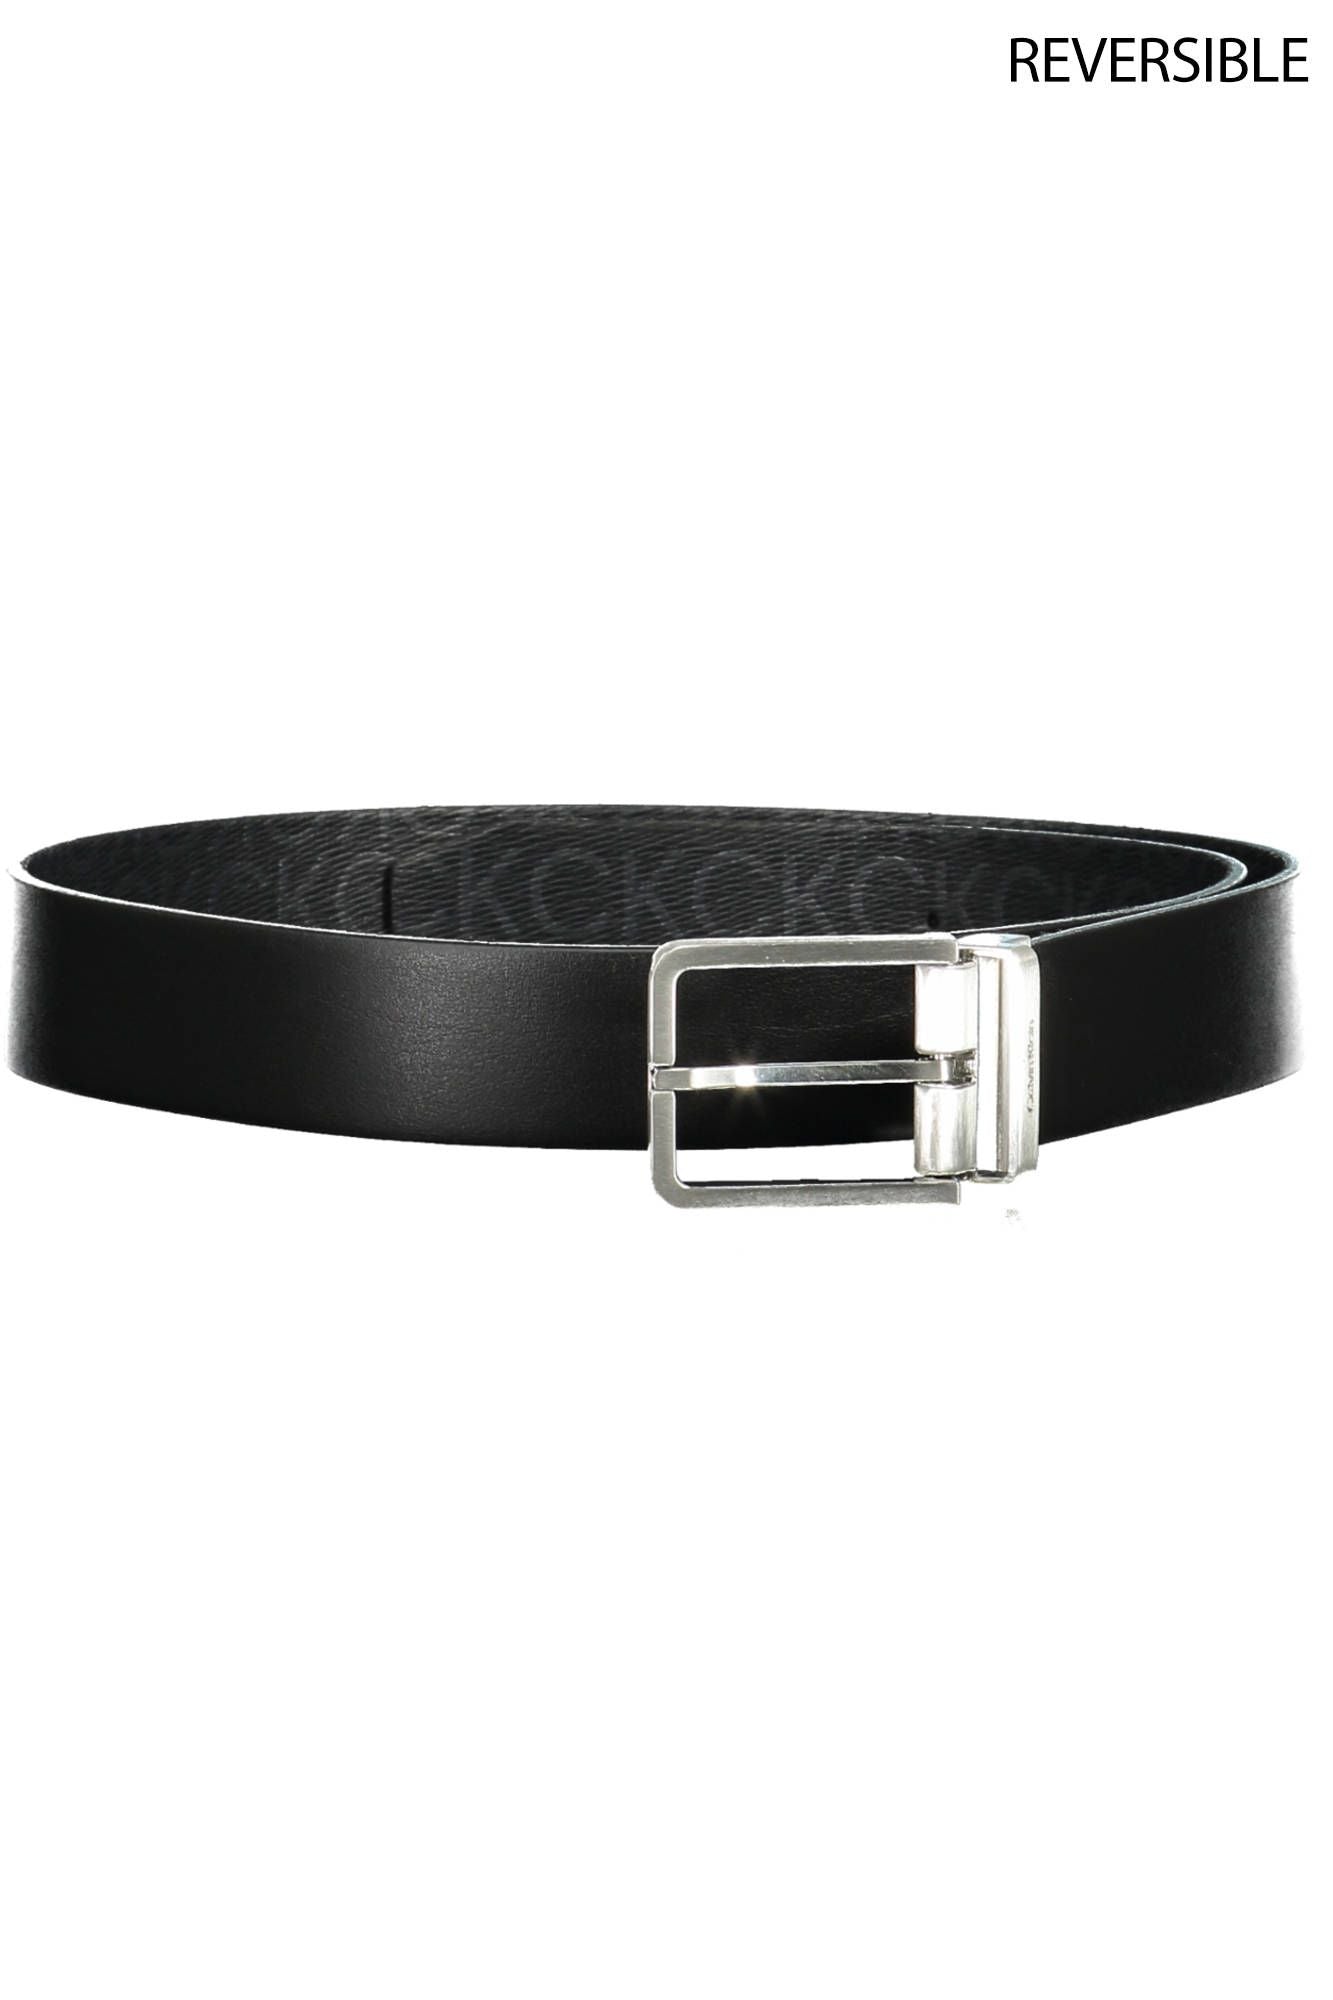 Elegant Reversible Black Leather Belt